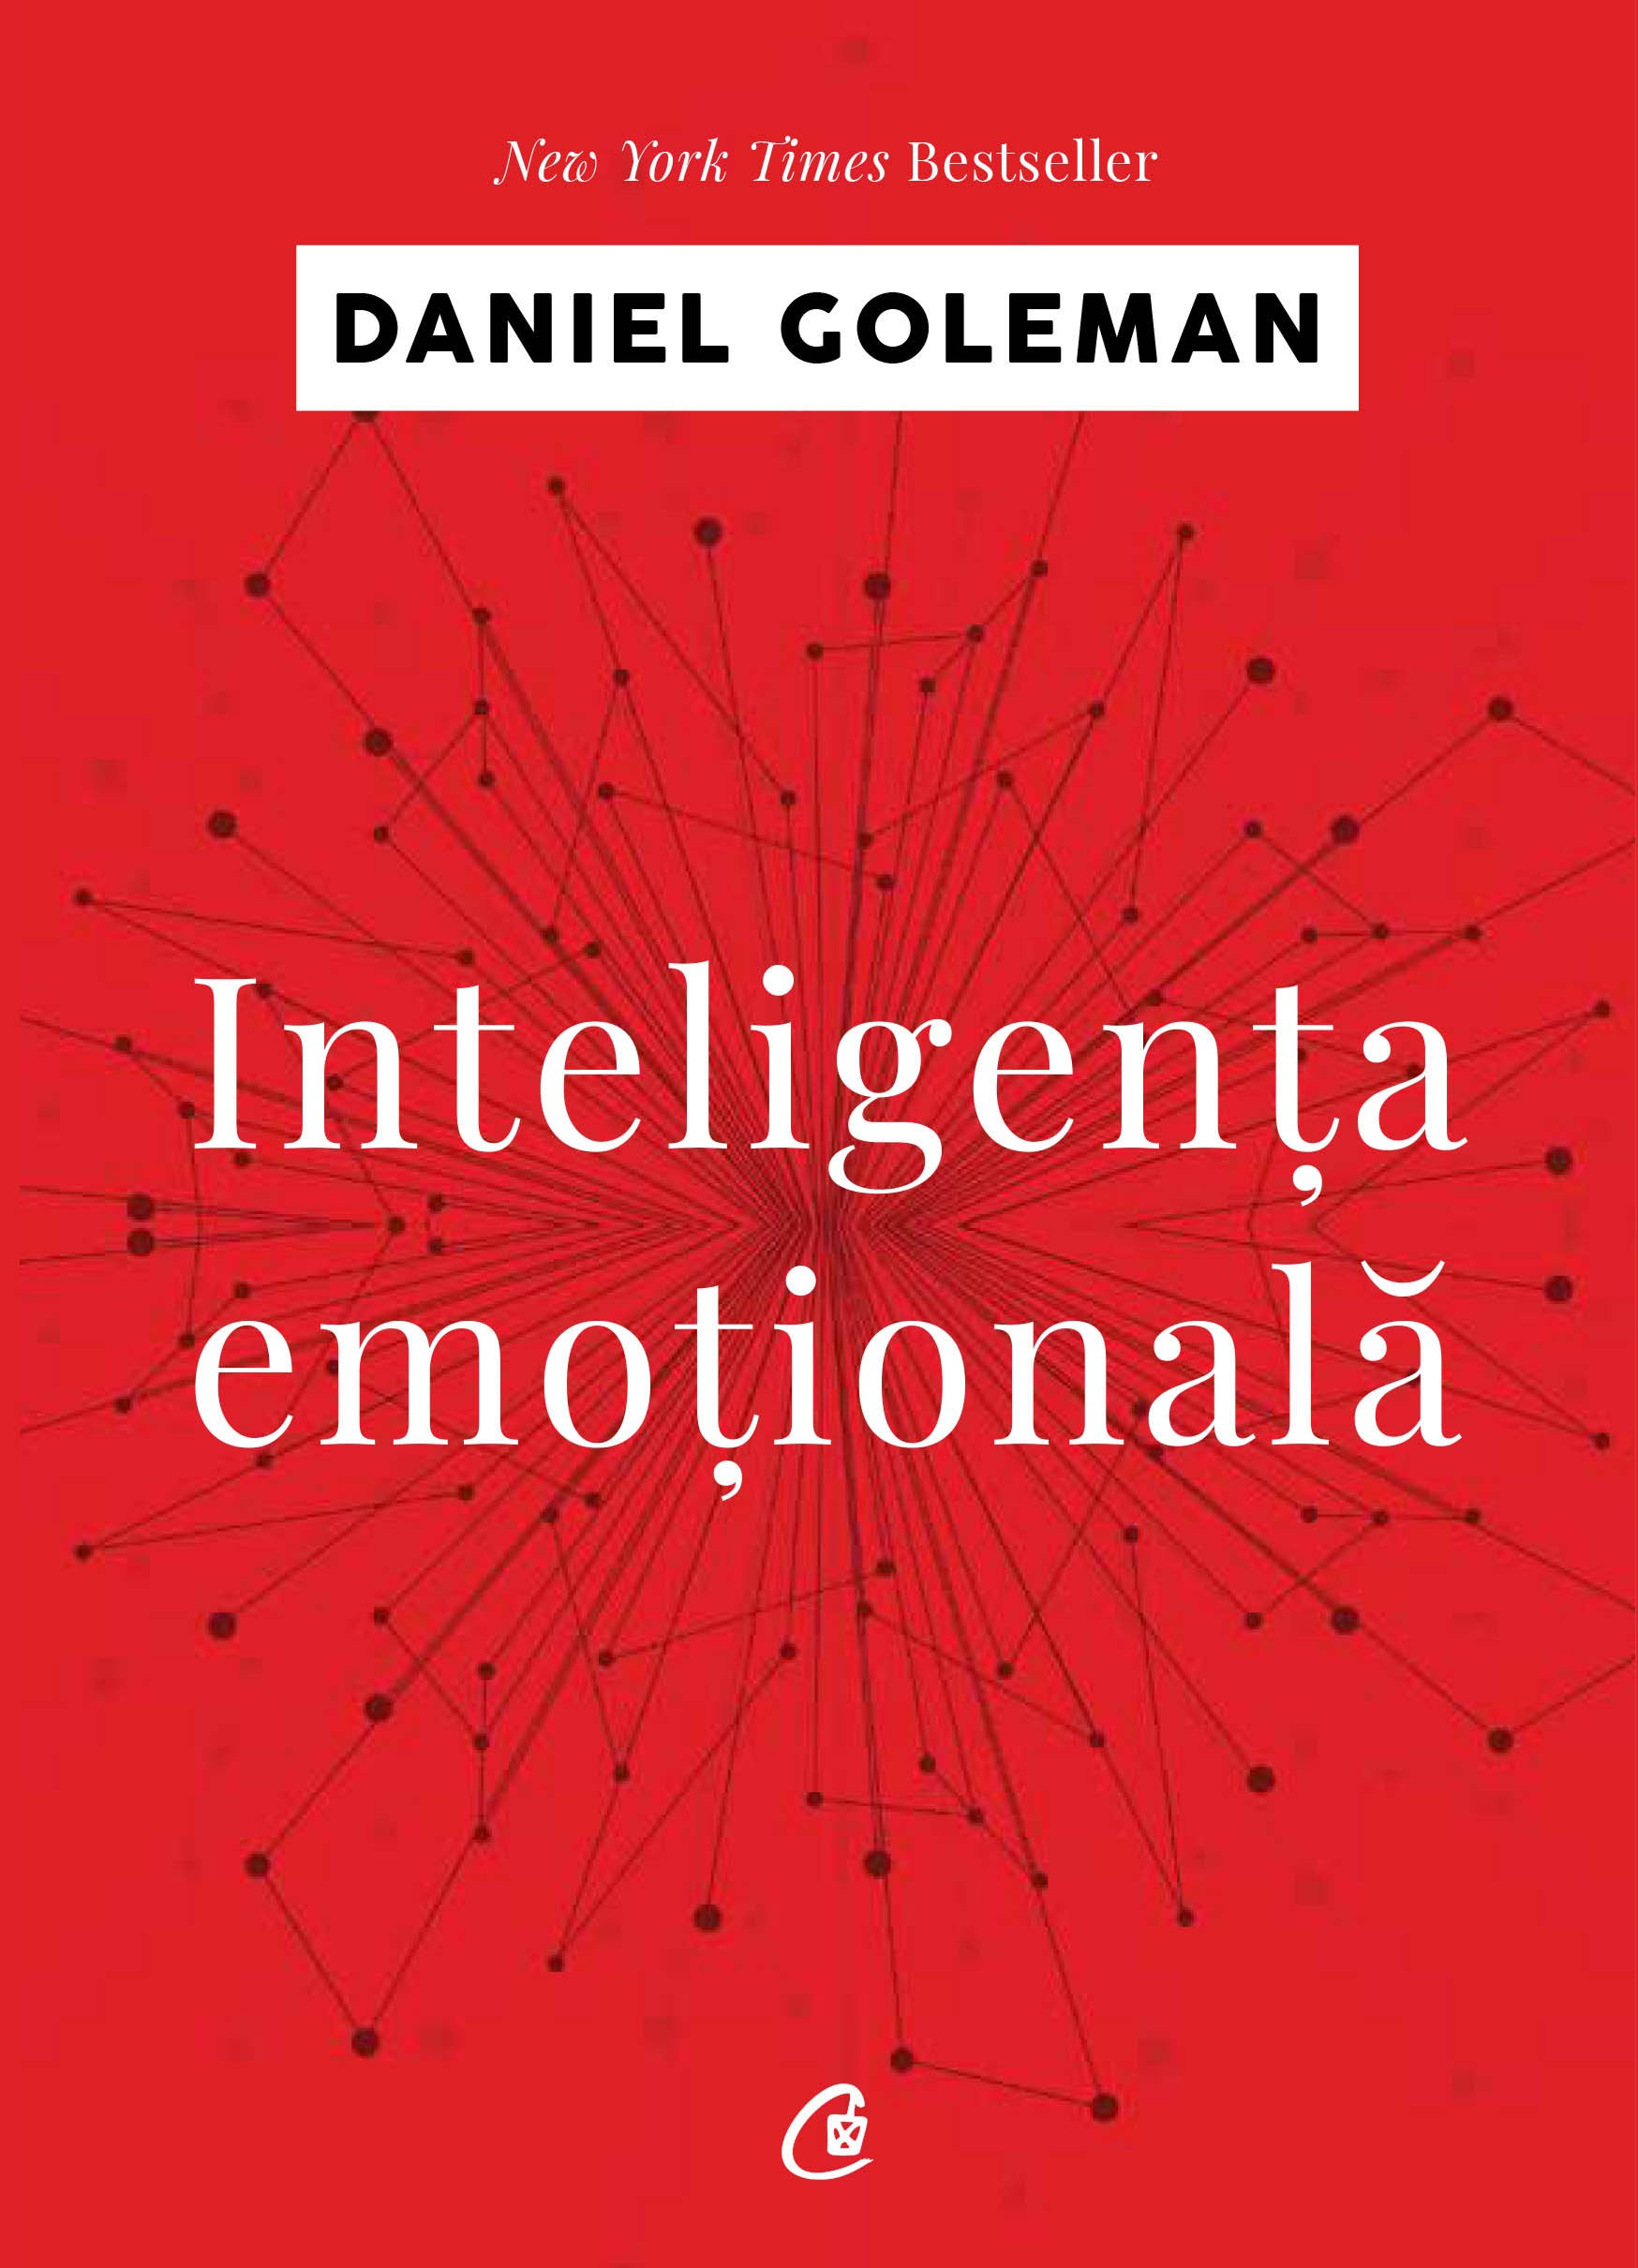 Inteligenta emotionala | Daniel Goleman carturesti.ro poza bestsellers.ro